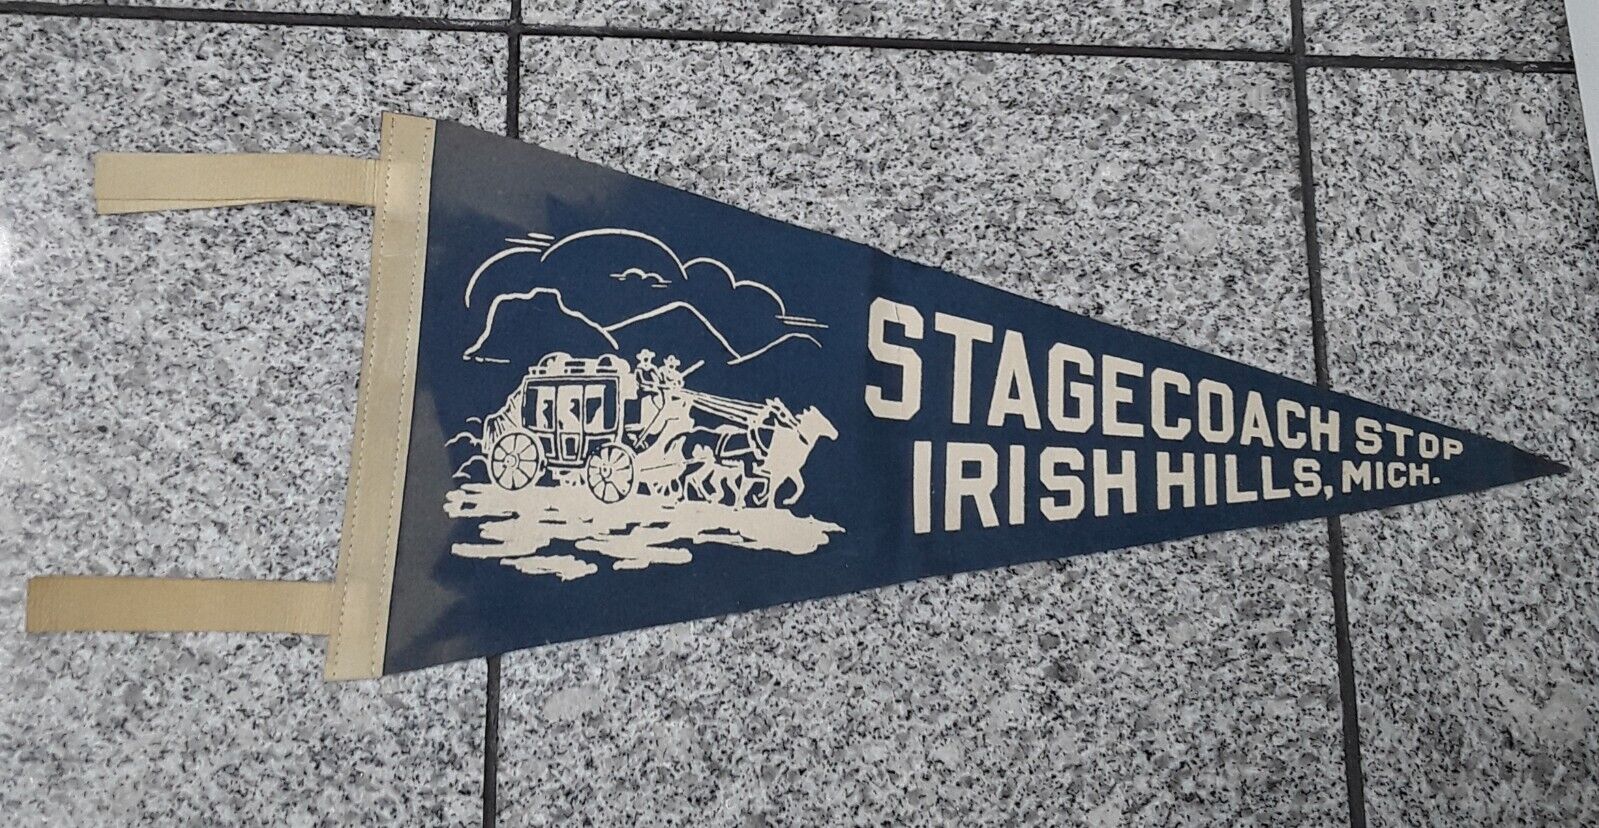 VINTAGE STAGECOACH STOP IRISH HILLS MICHIGAN FELT PENNANT